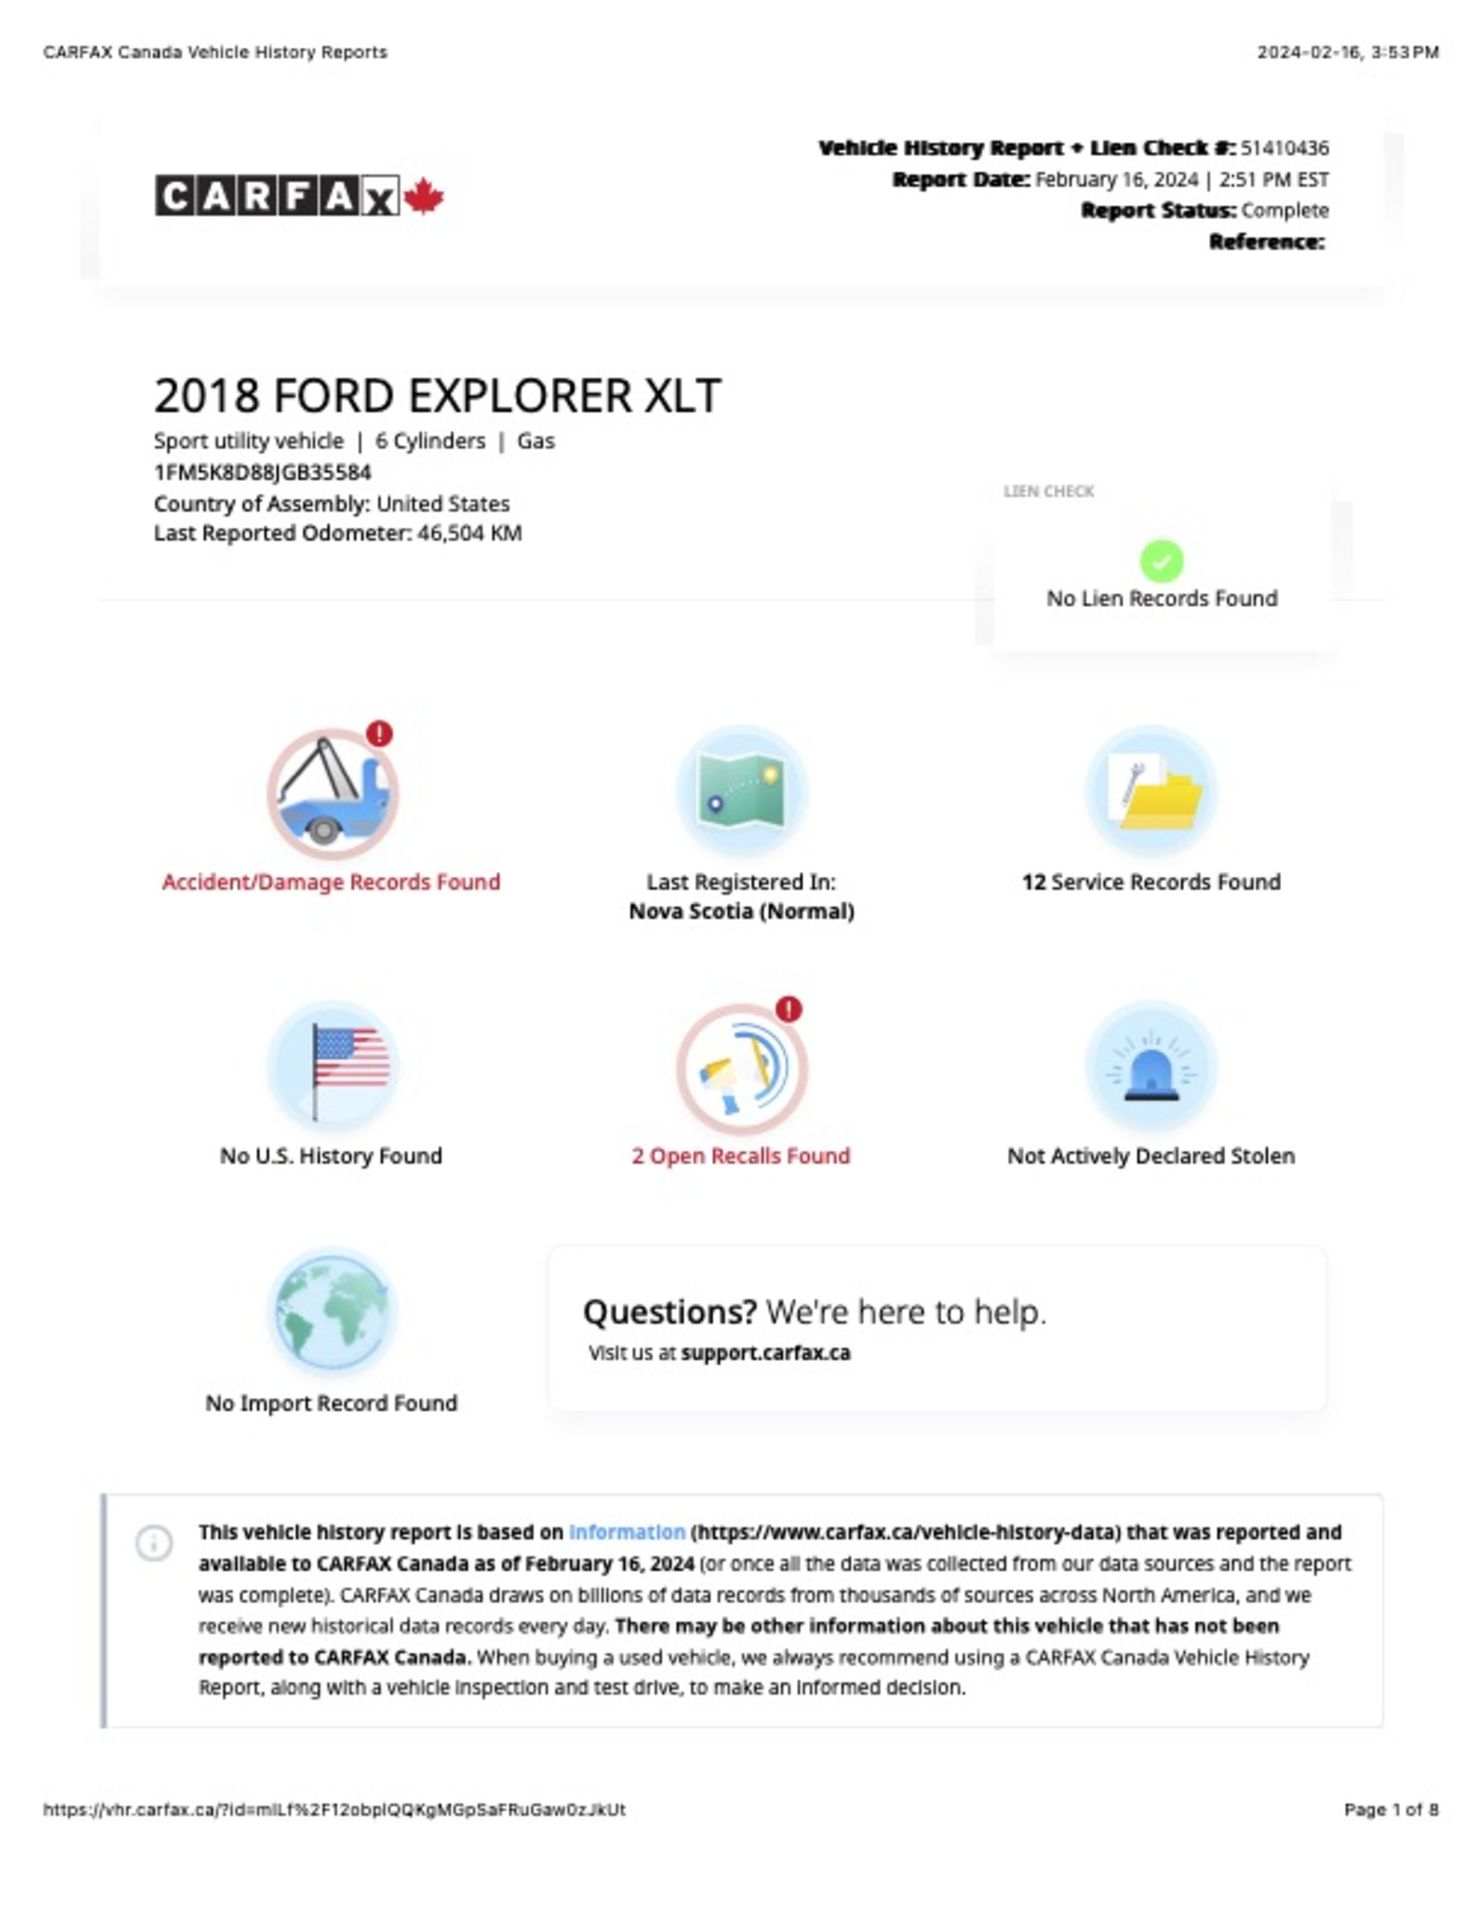 2018 Ford Explorer - Image 19 of 27